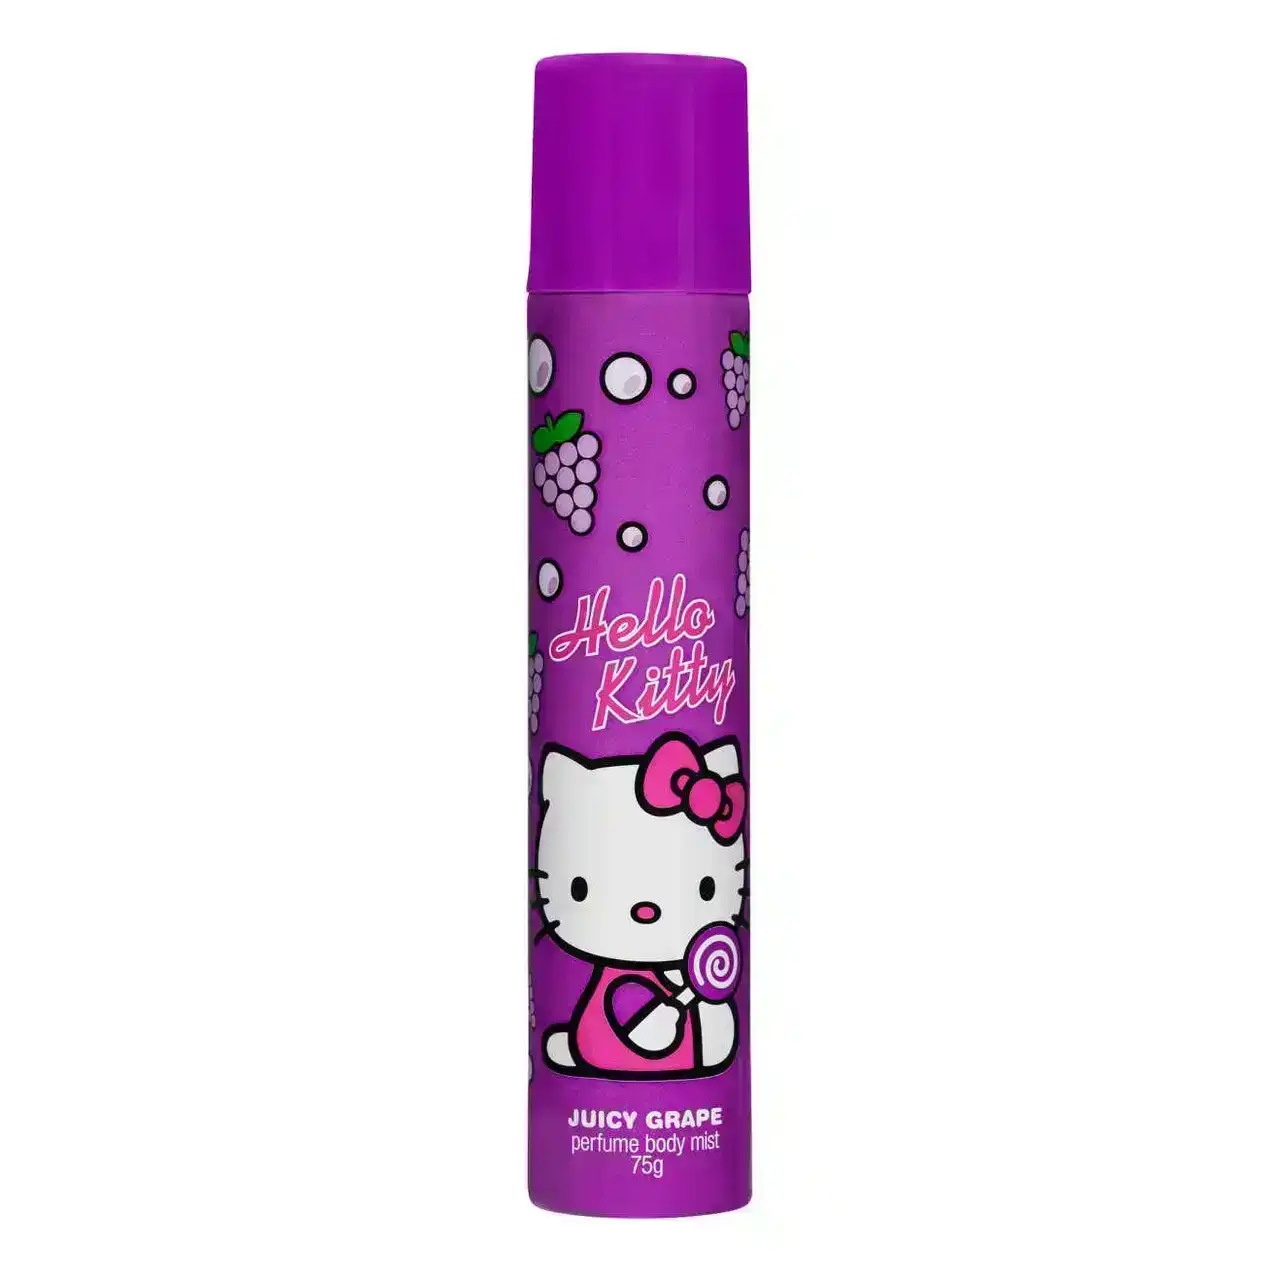 Hello Kitty Juicy Grape Perfume Body Mist 75g